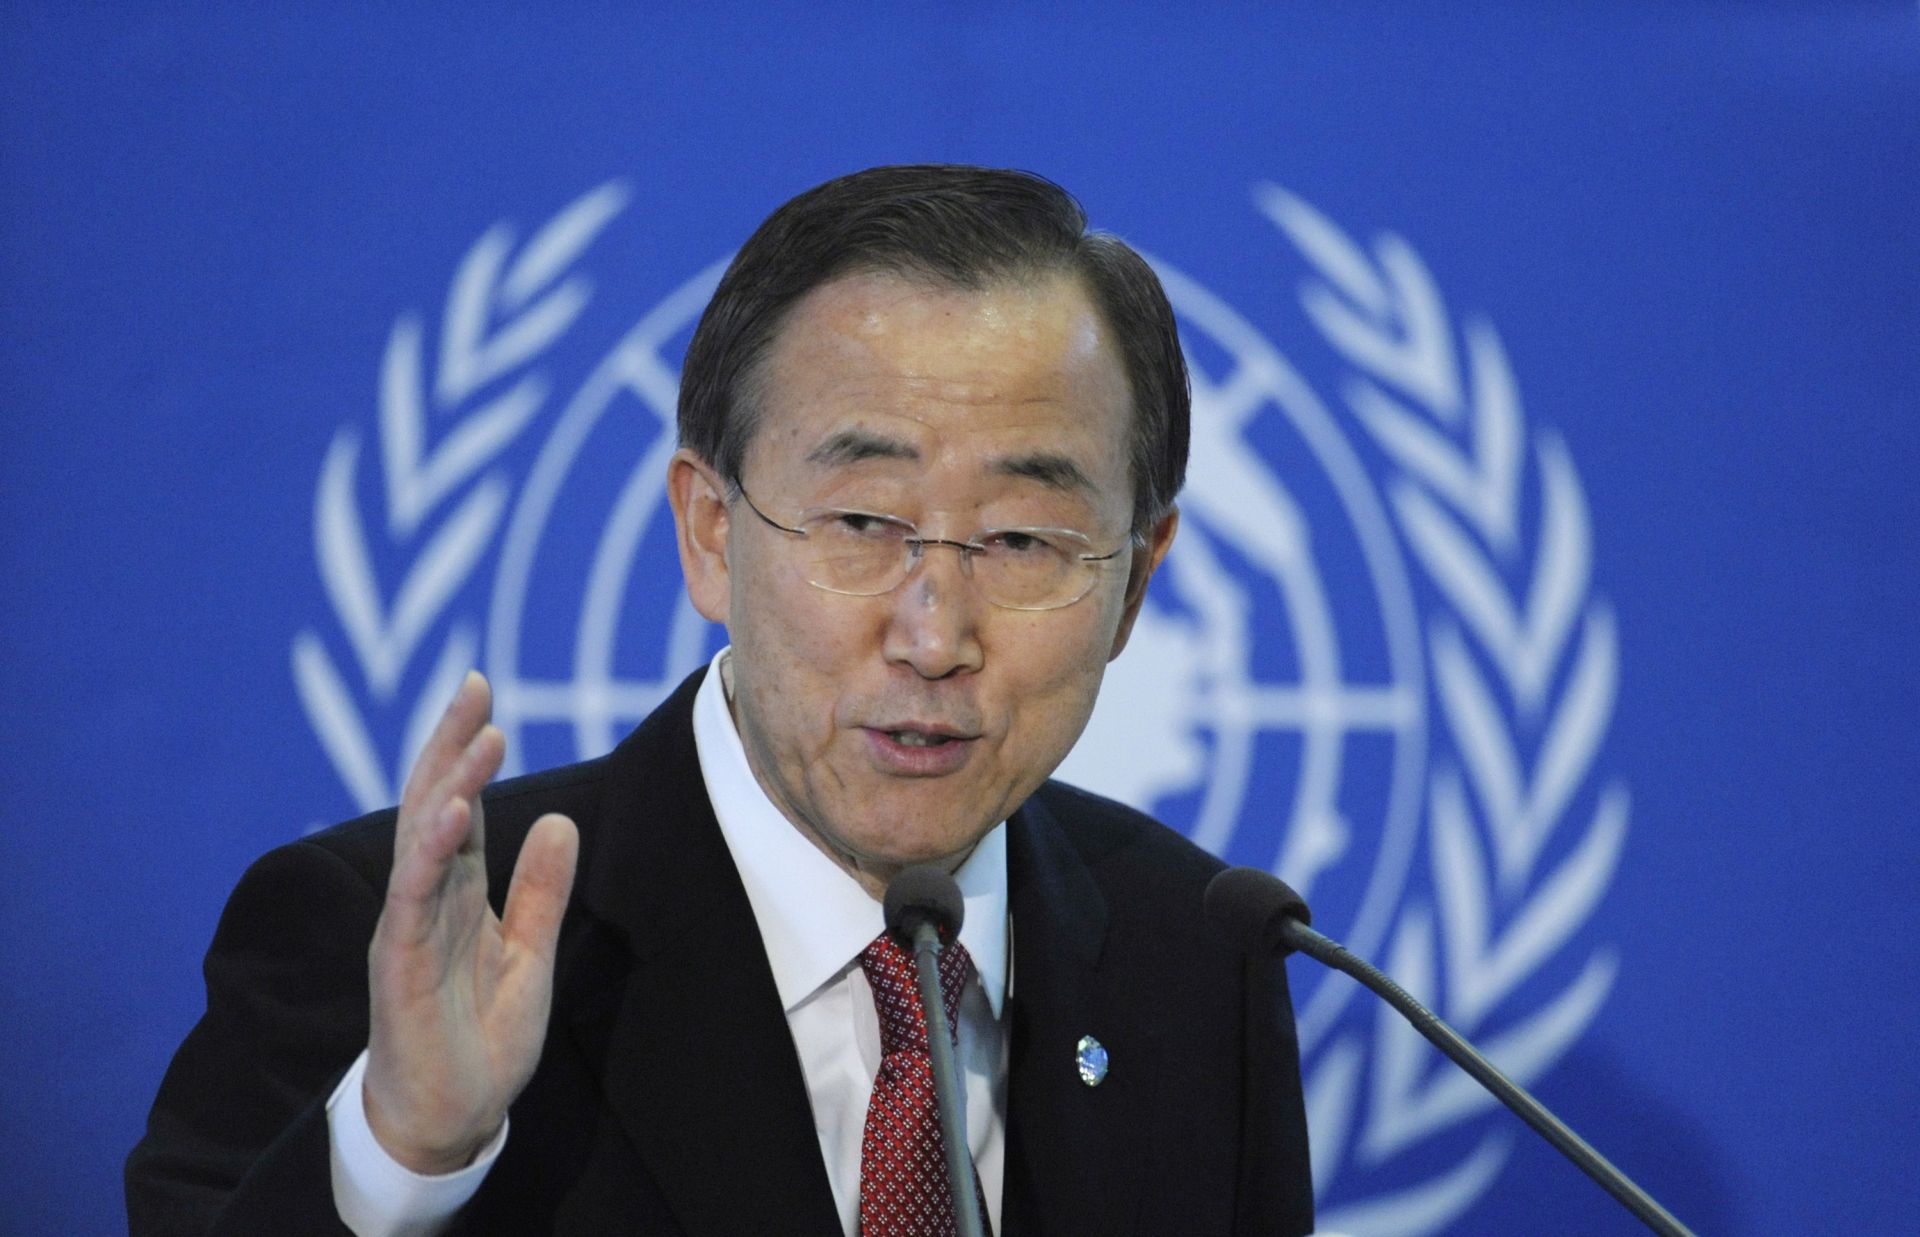 Ban Ki-moon "South Sudan leaders failed people, warns of sanctions"